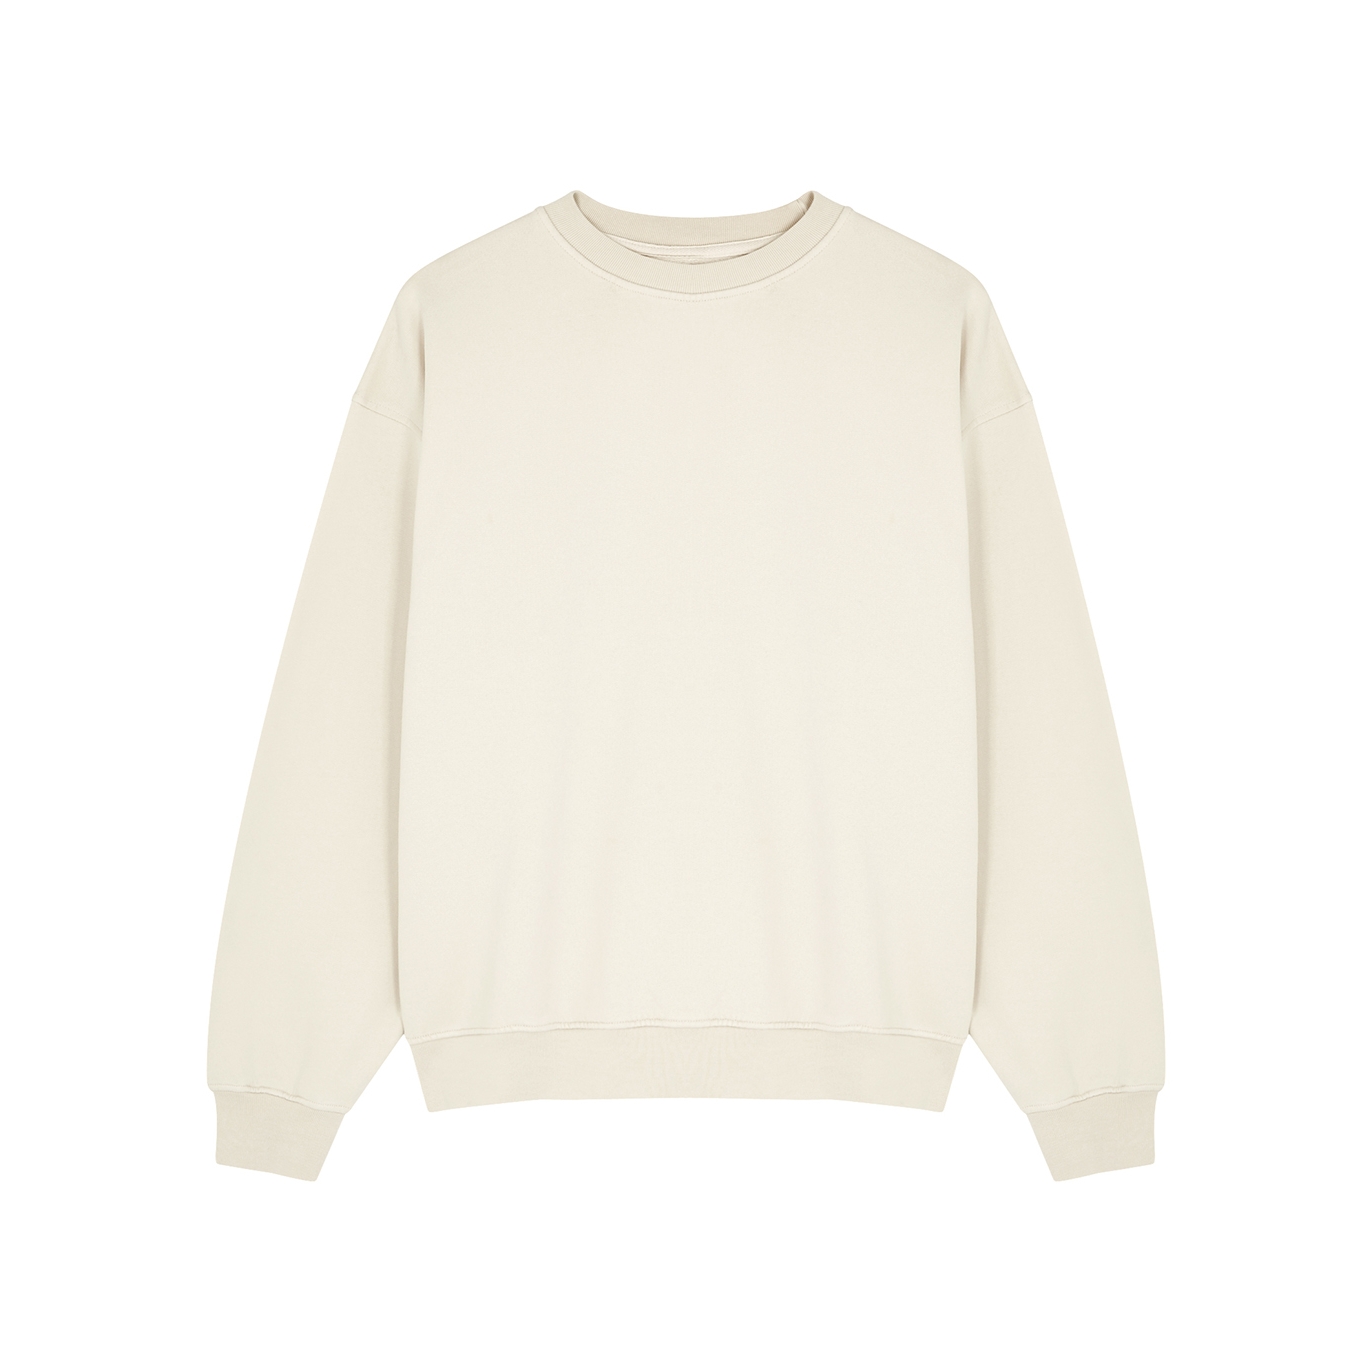 Colorful Standard Cream Cotton Sweatshirt